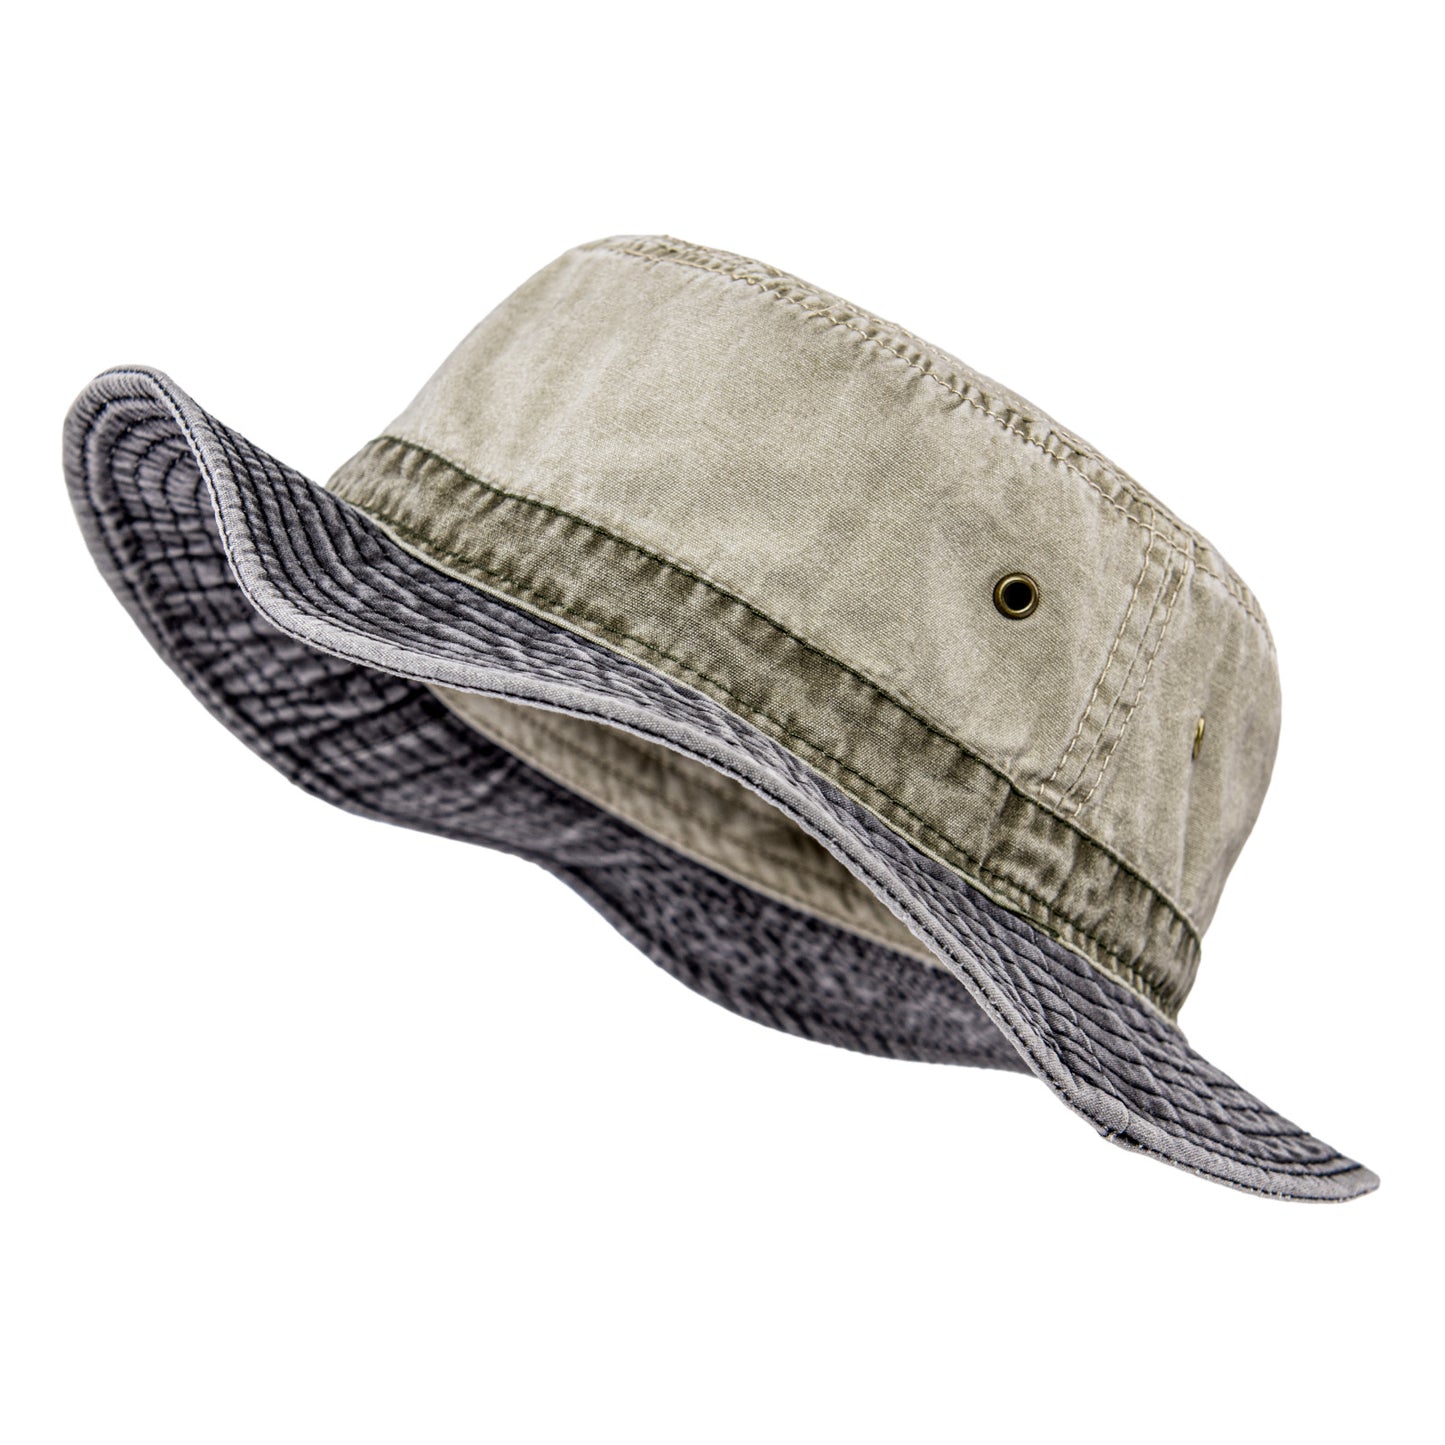 VOBOOM Men's Bucket Hats Summer Panama Hat Hunting for Male – Voboom Store